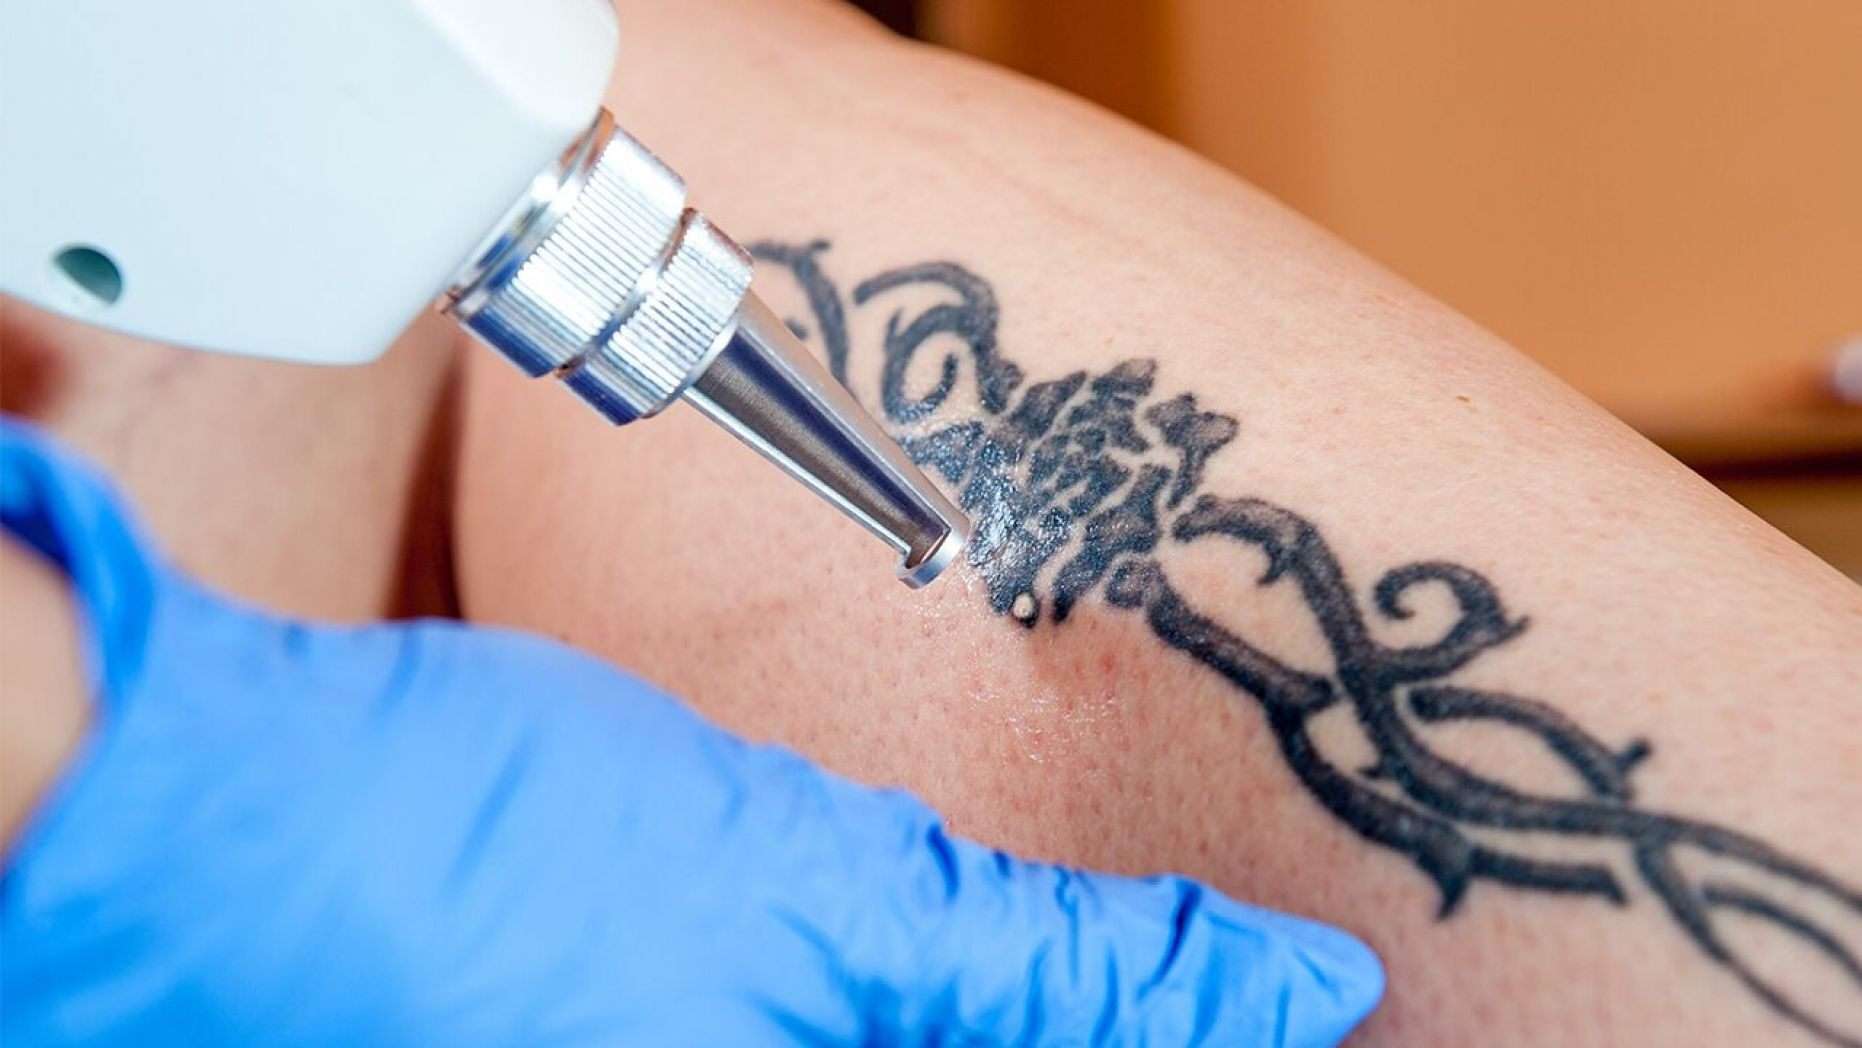 Human Sex Trafficking in Omaha Branding Tattoo Removal